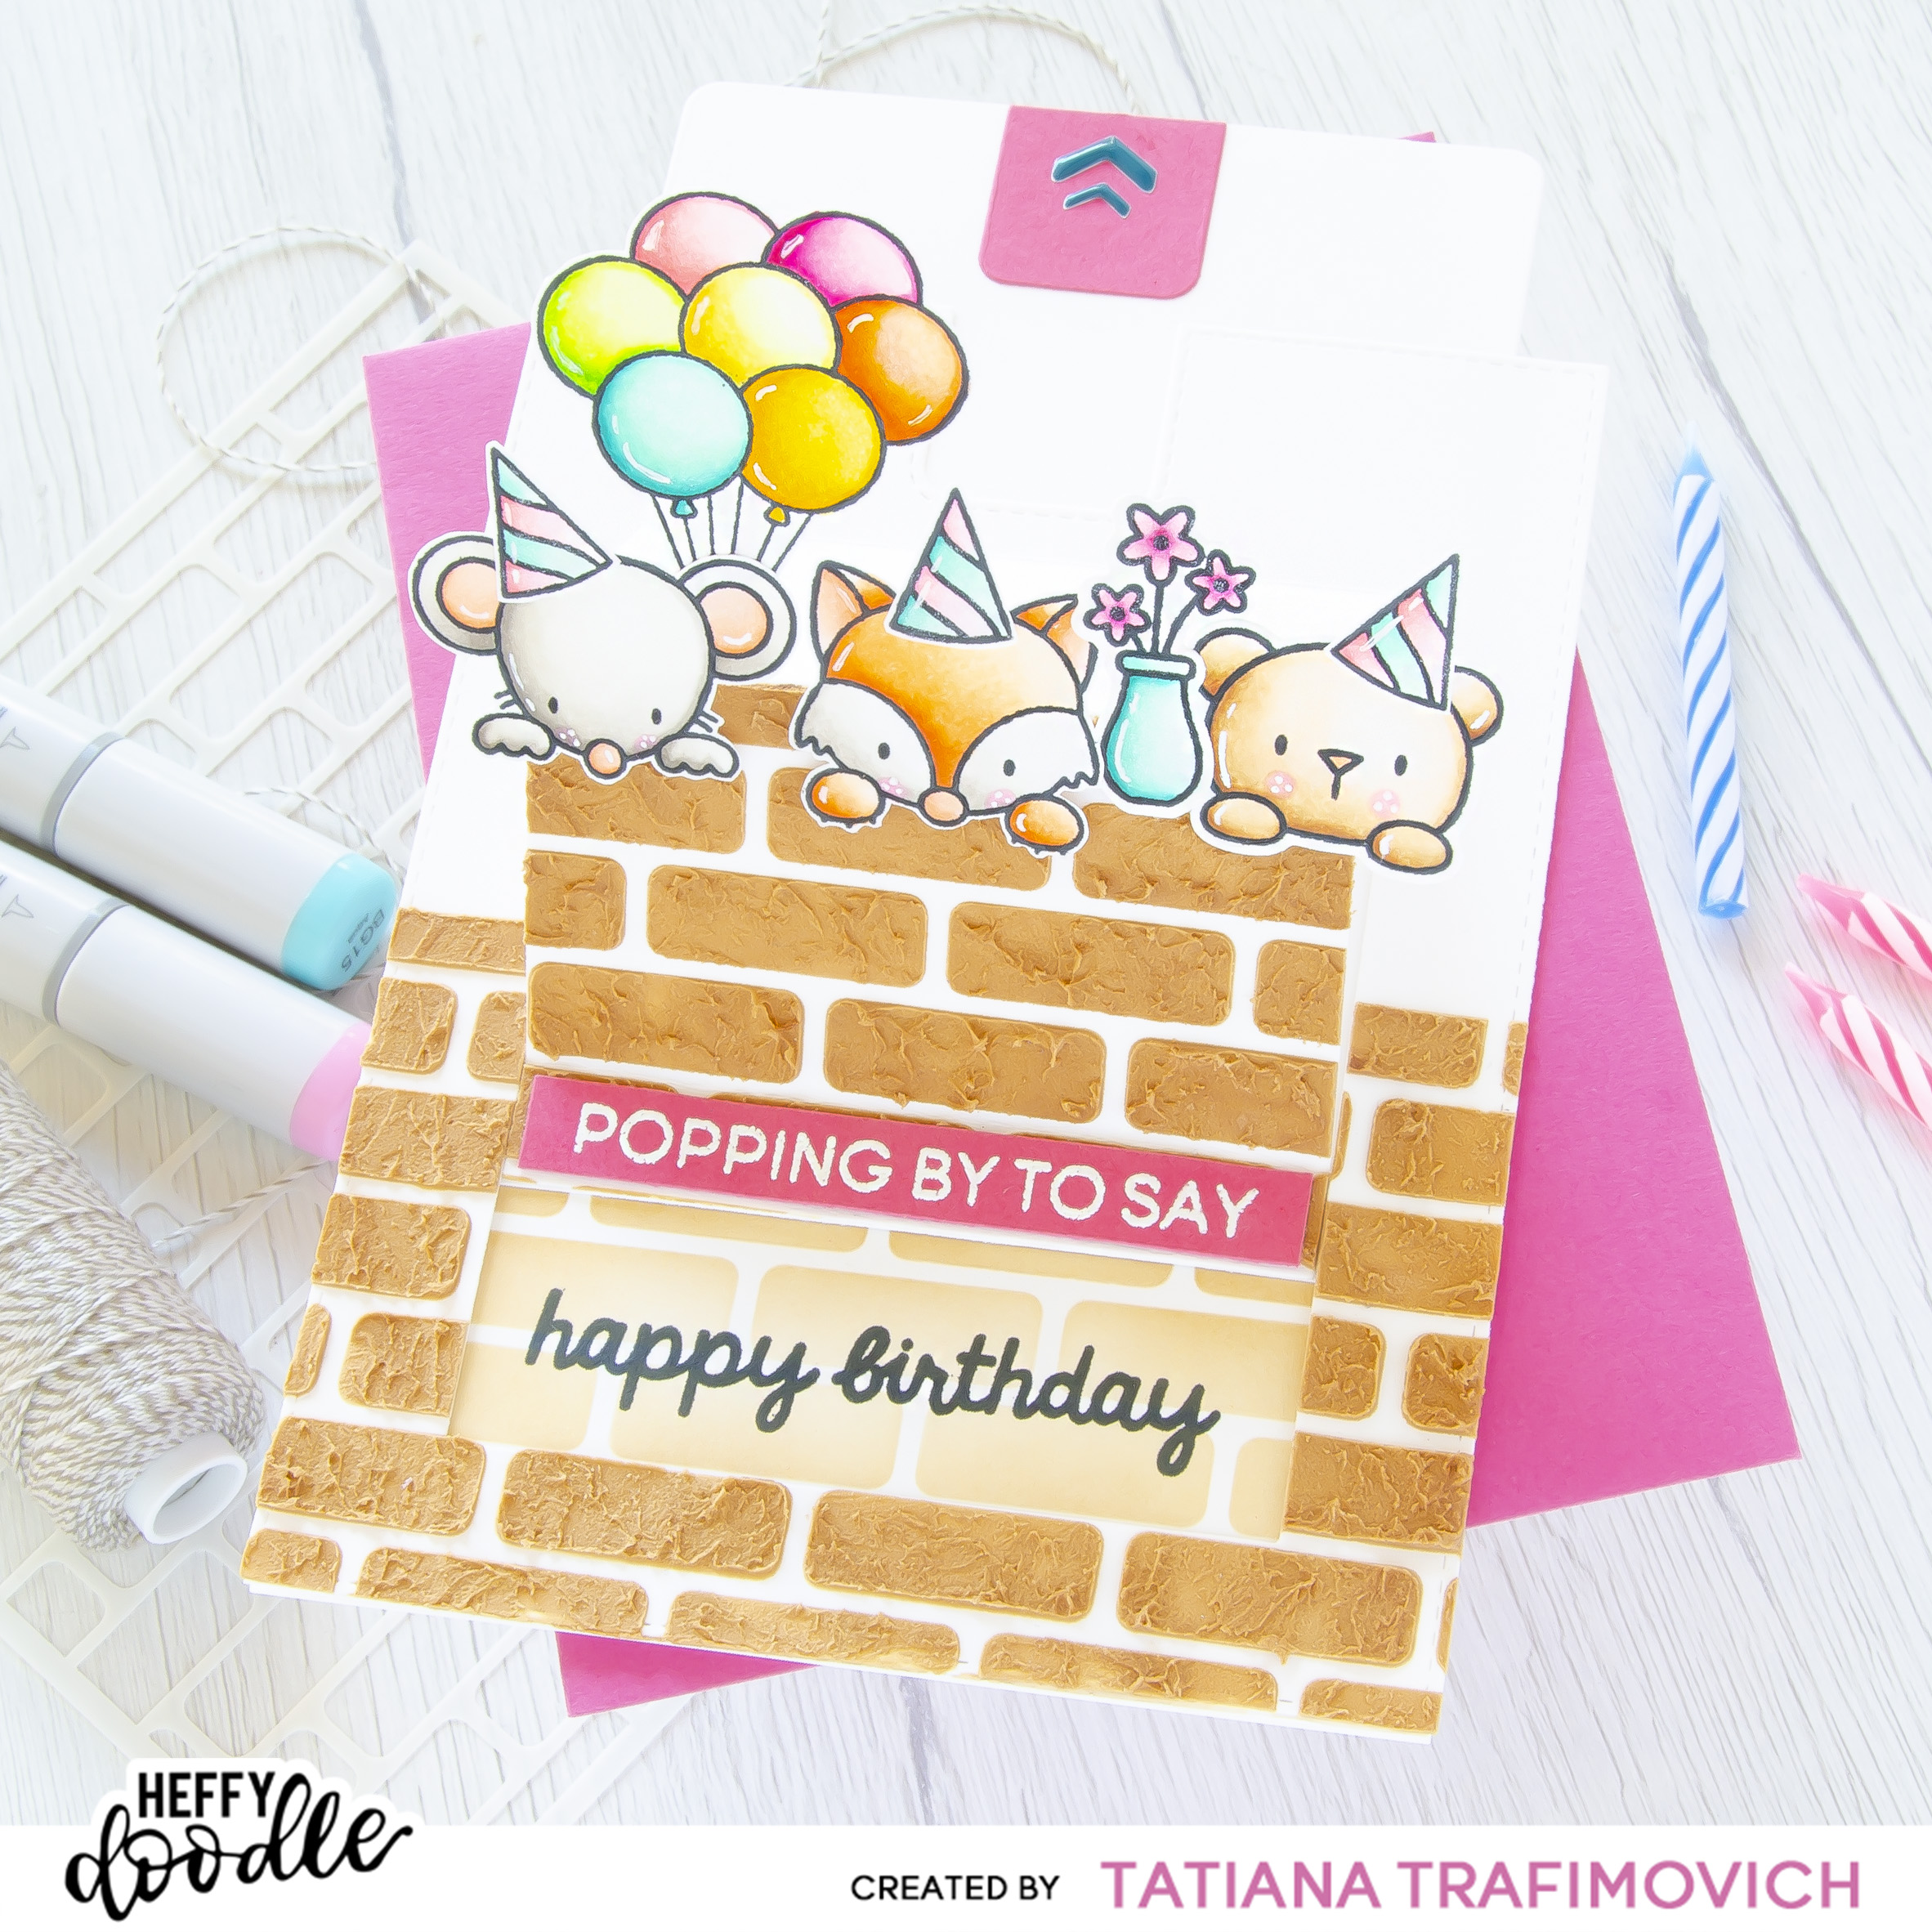 Popping By To Say... Happy Birthday! #handmade card by Tatiana Trafimovich #tatianacraftandart - Popping By Stamp Set by Heffy Doodle #heffydoodle